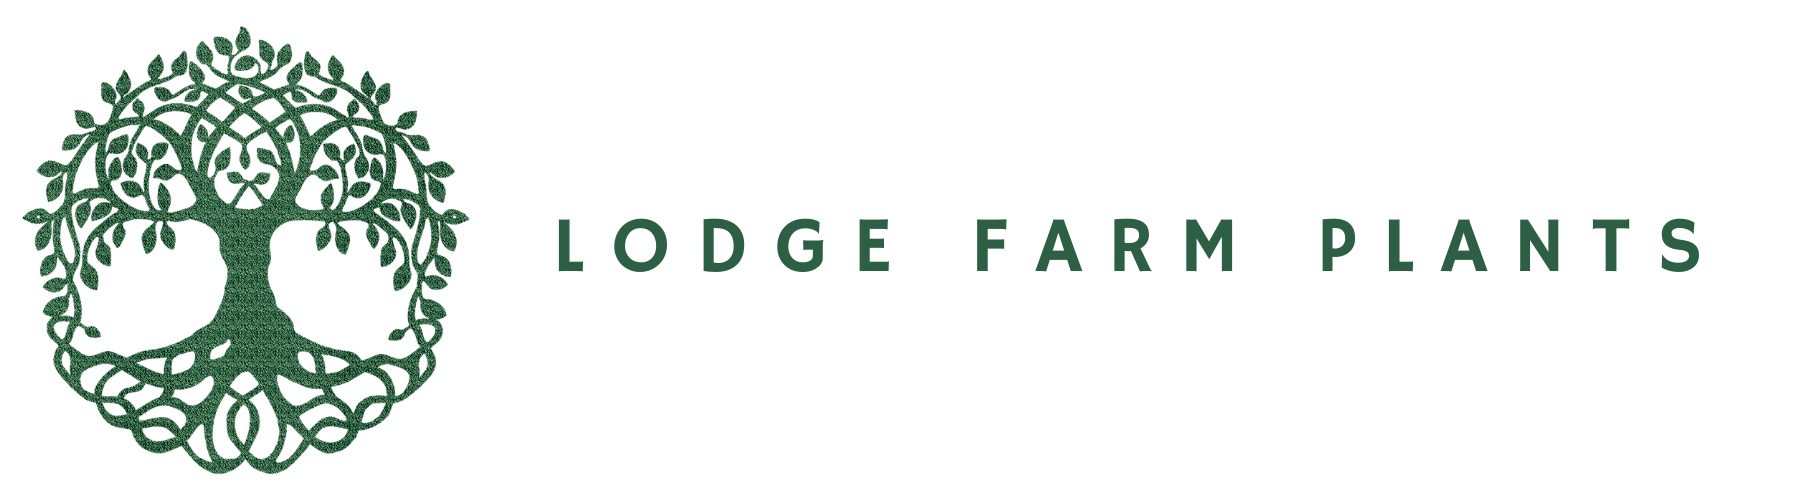 Lodge Farm Plants